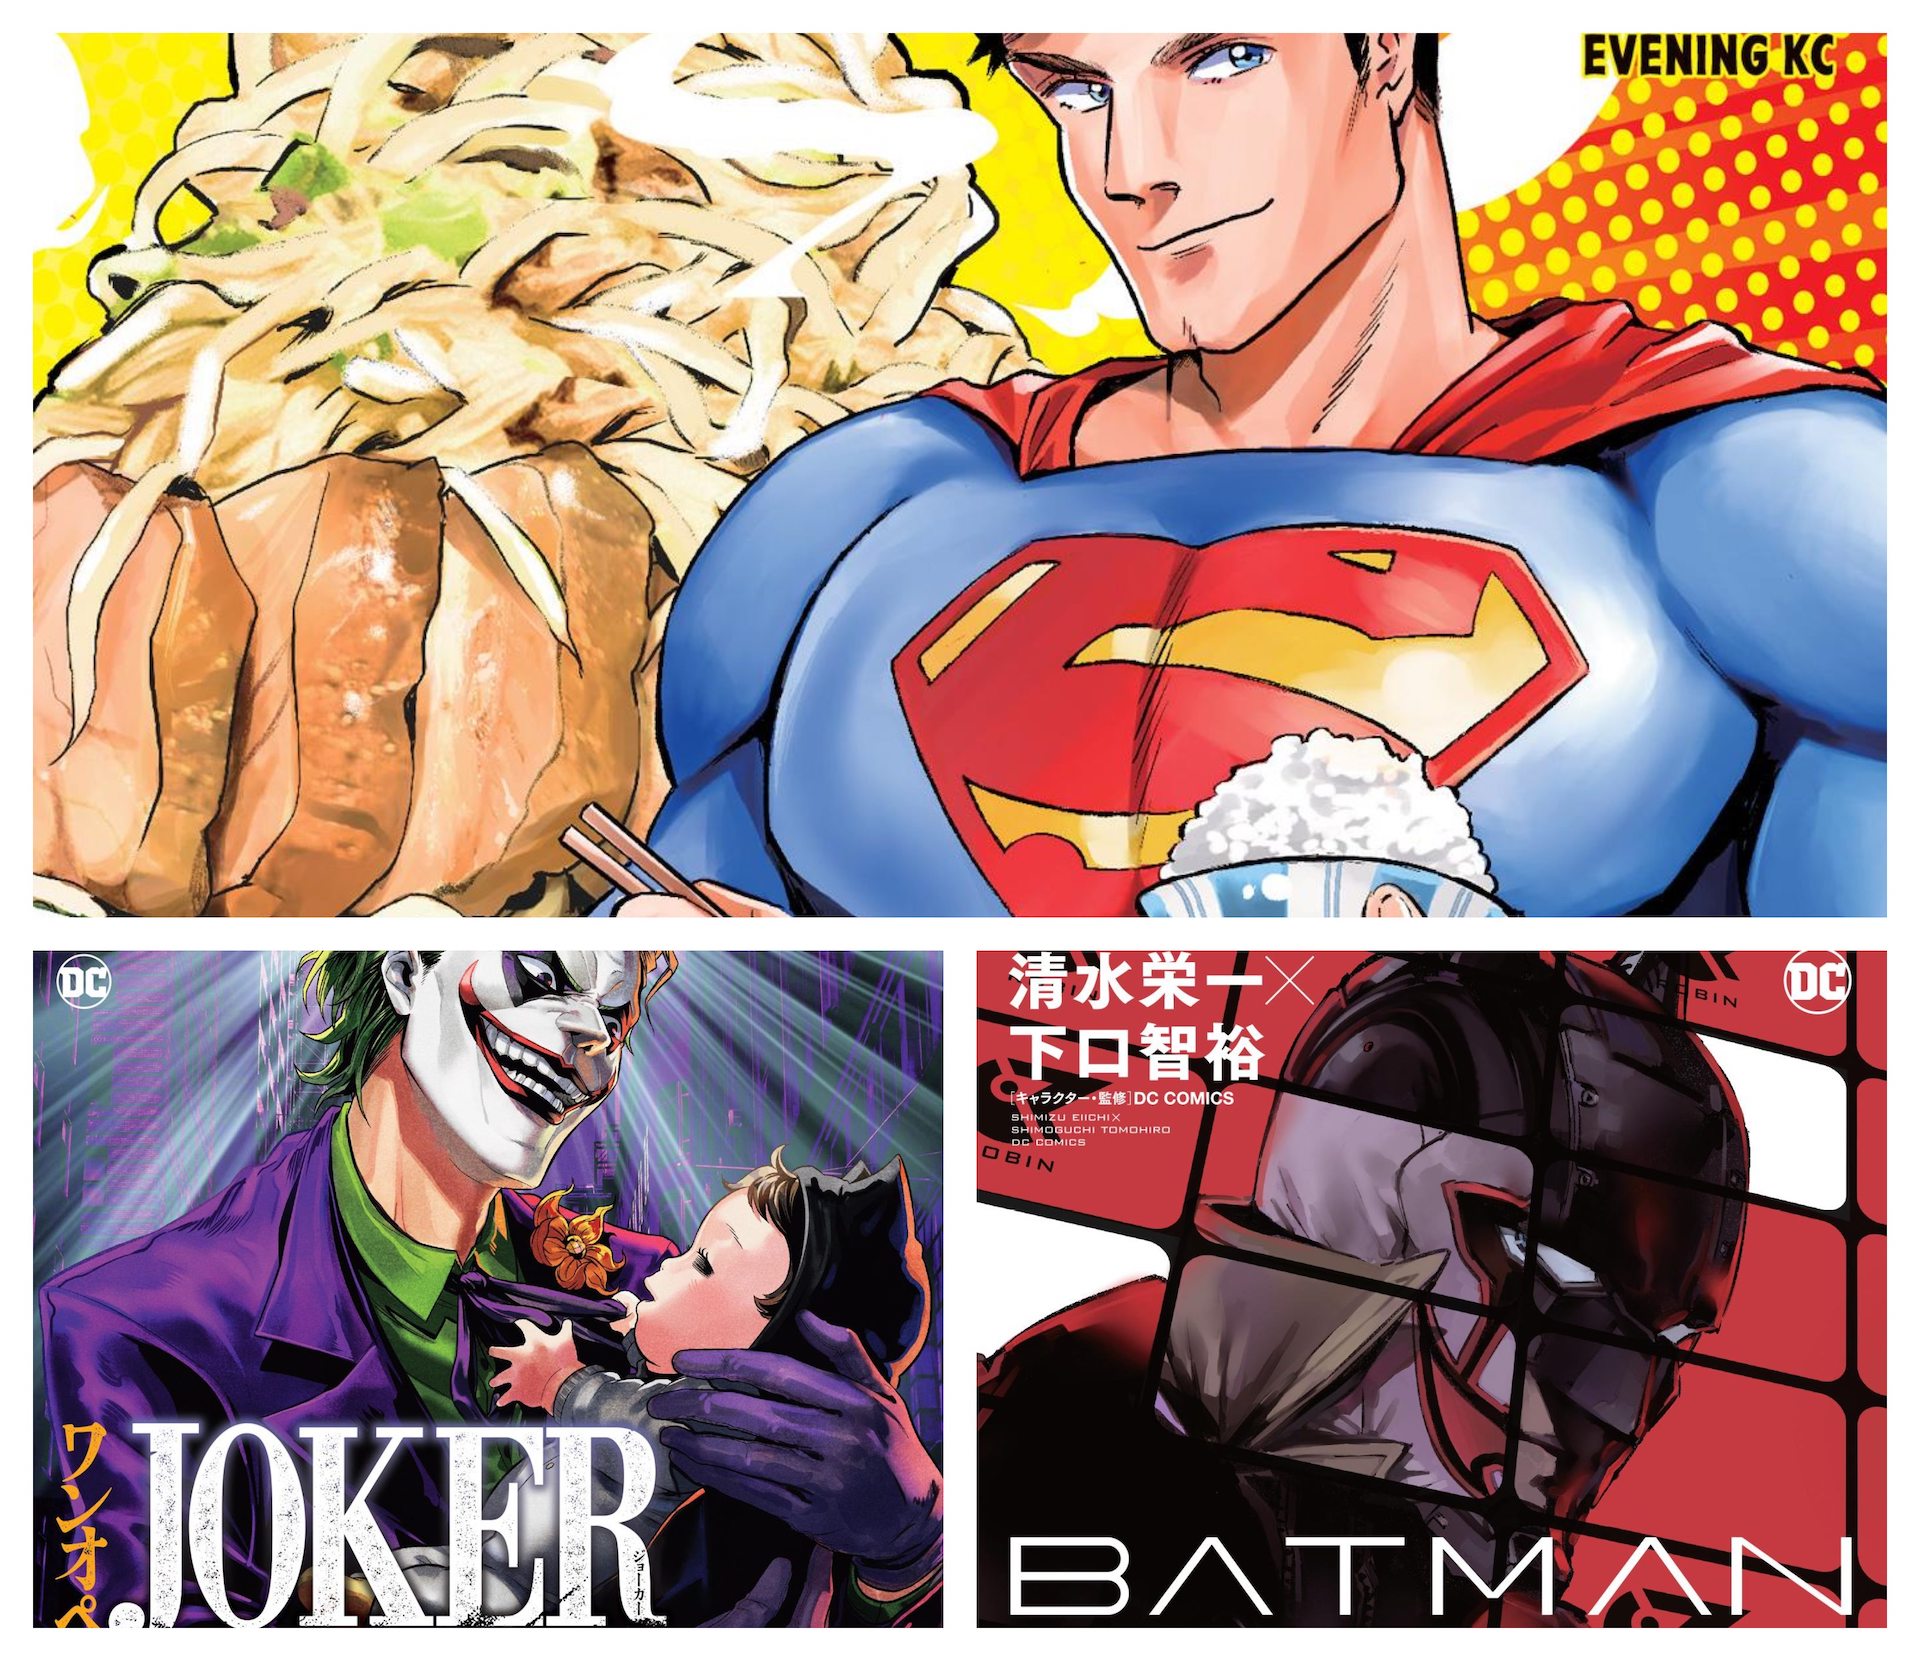 DC and Kodansha releasing Superman, Batman, and Joker manga in English